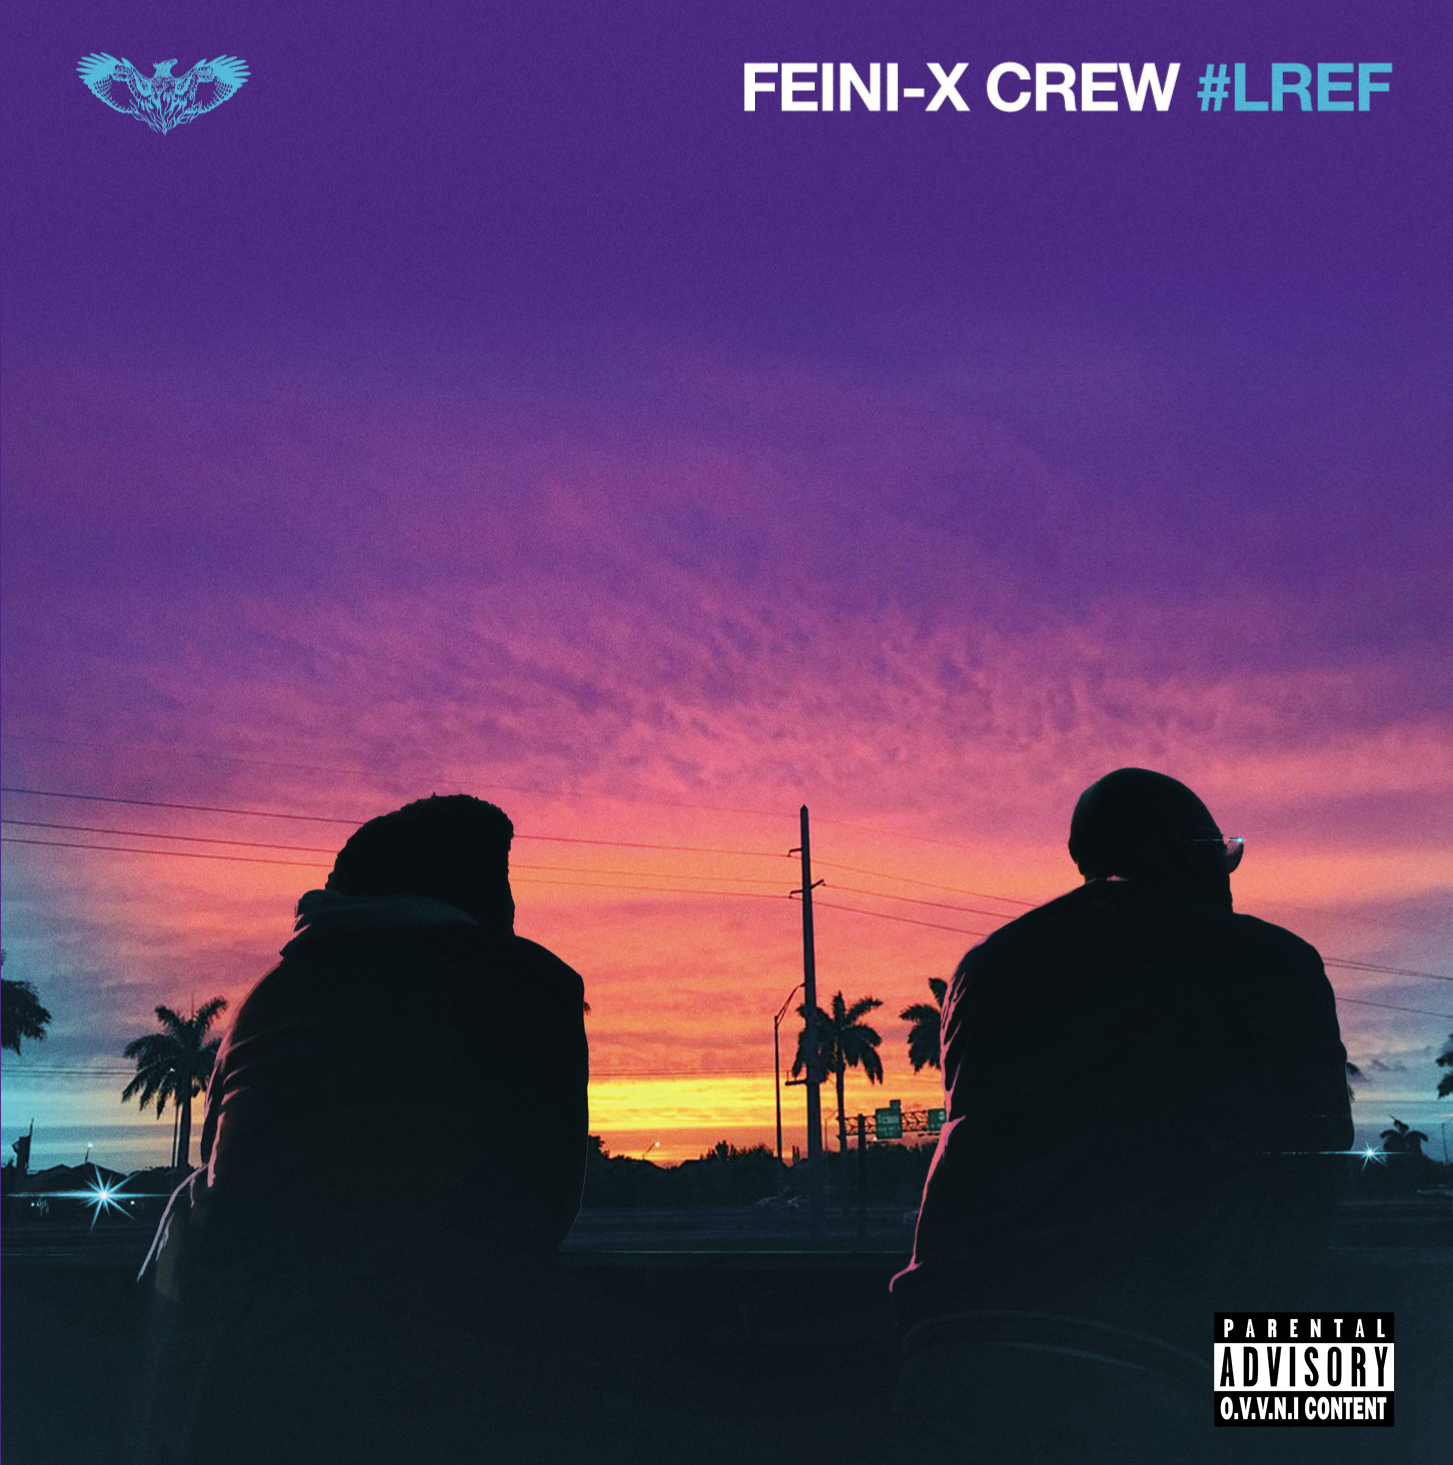 feini-x crew